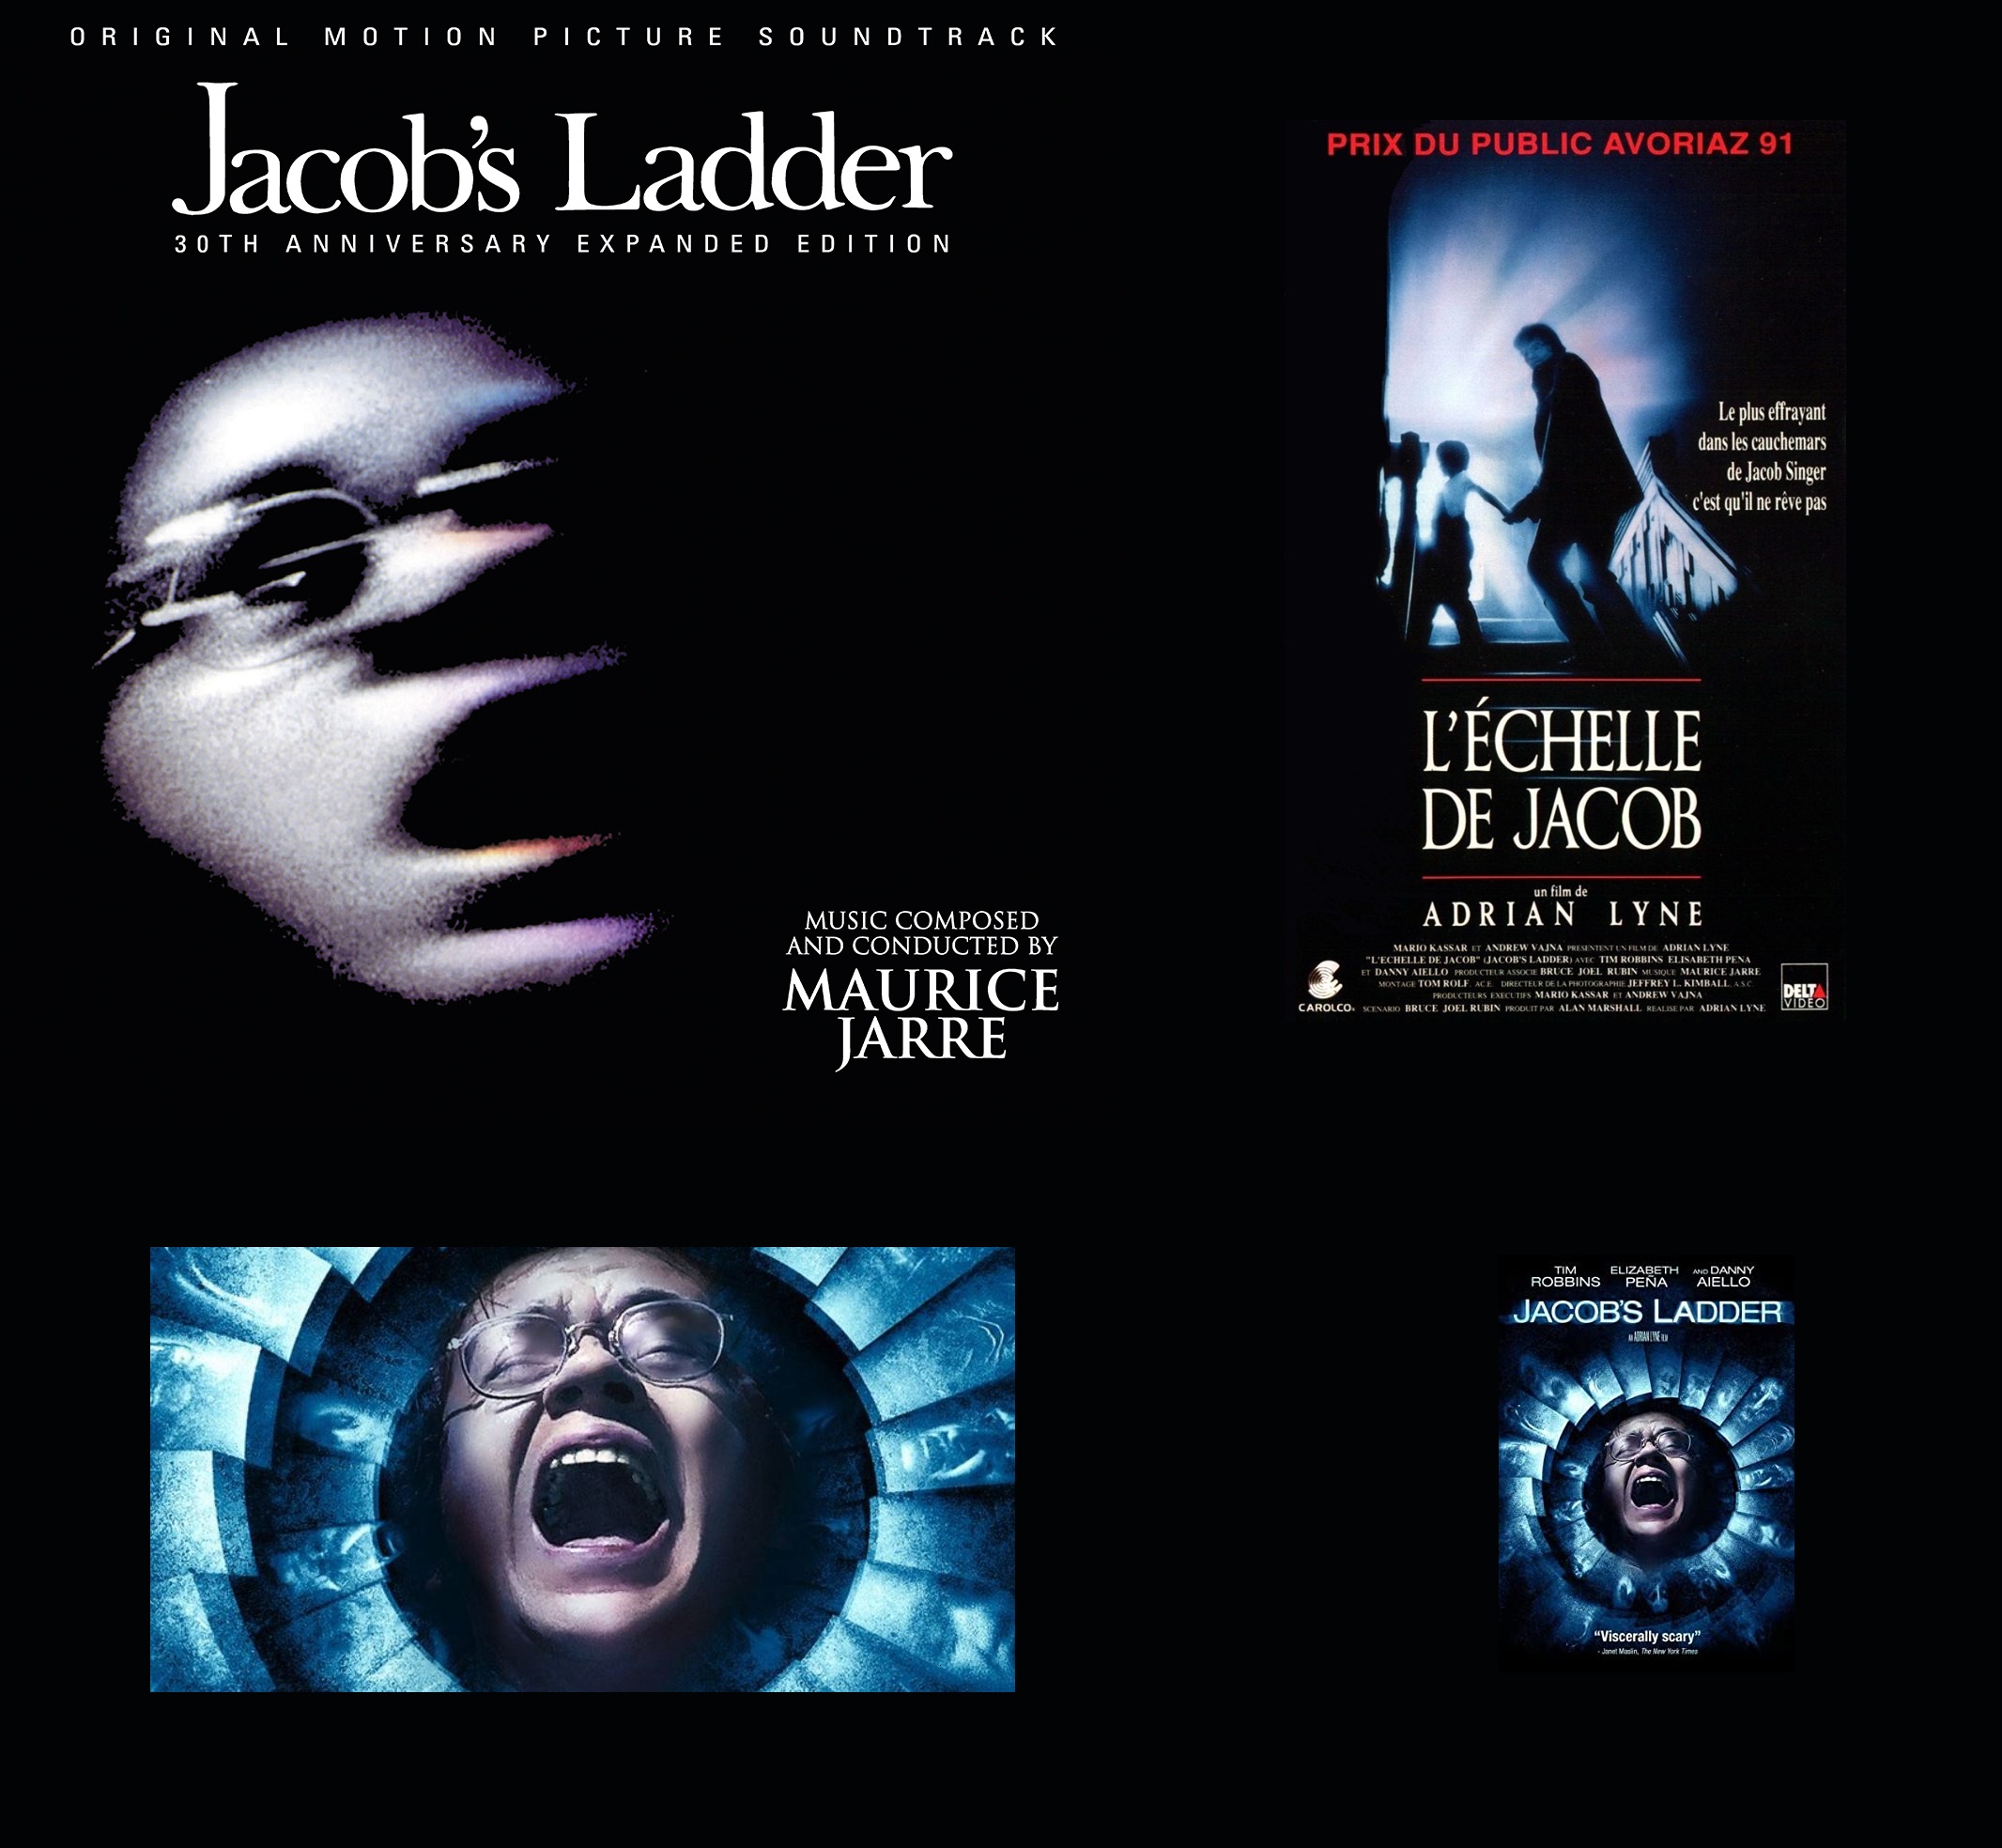 L'chelle de Jacob (1990) Jacob's Ladder The 30th anniversary edition